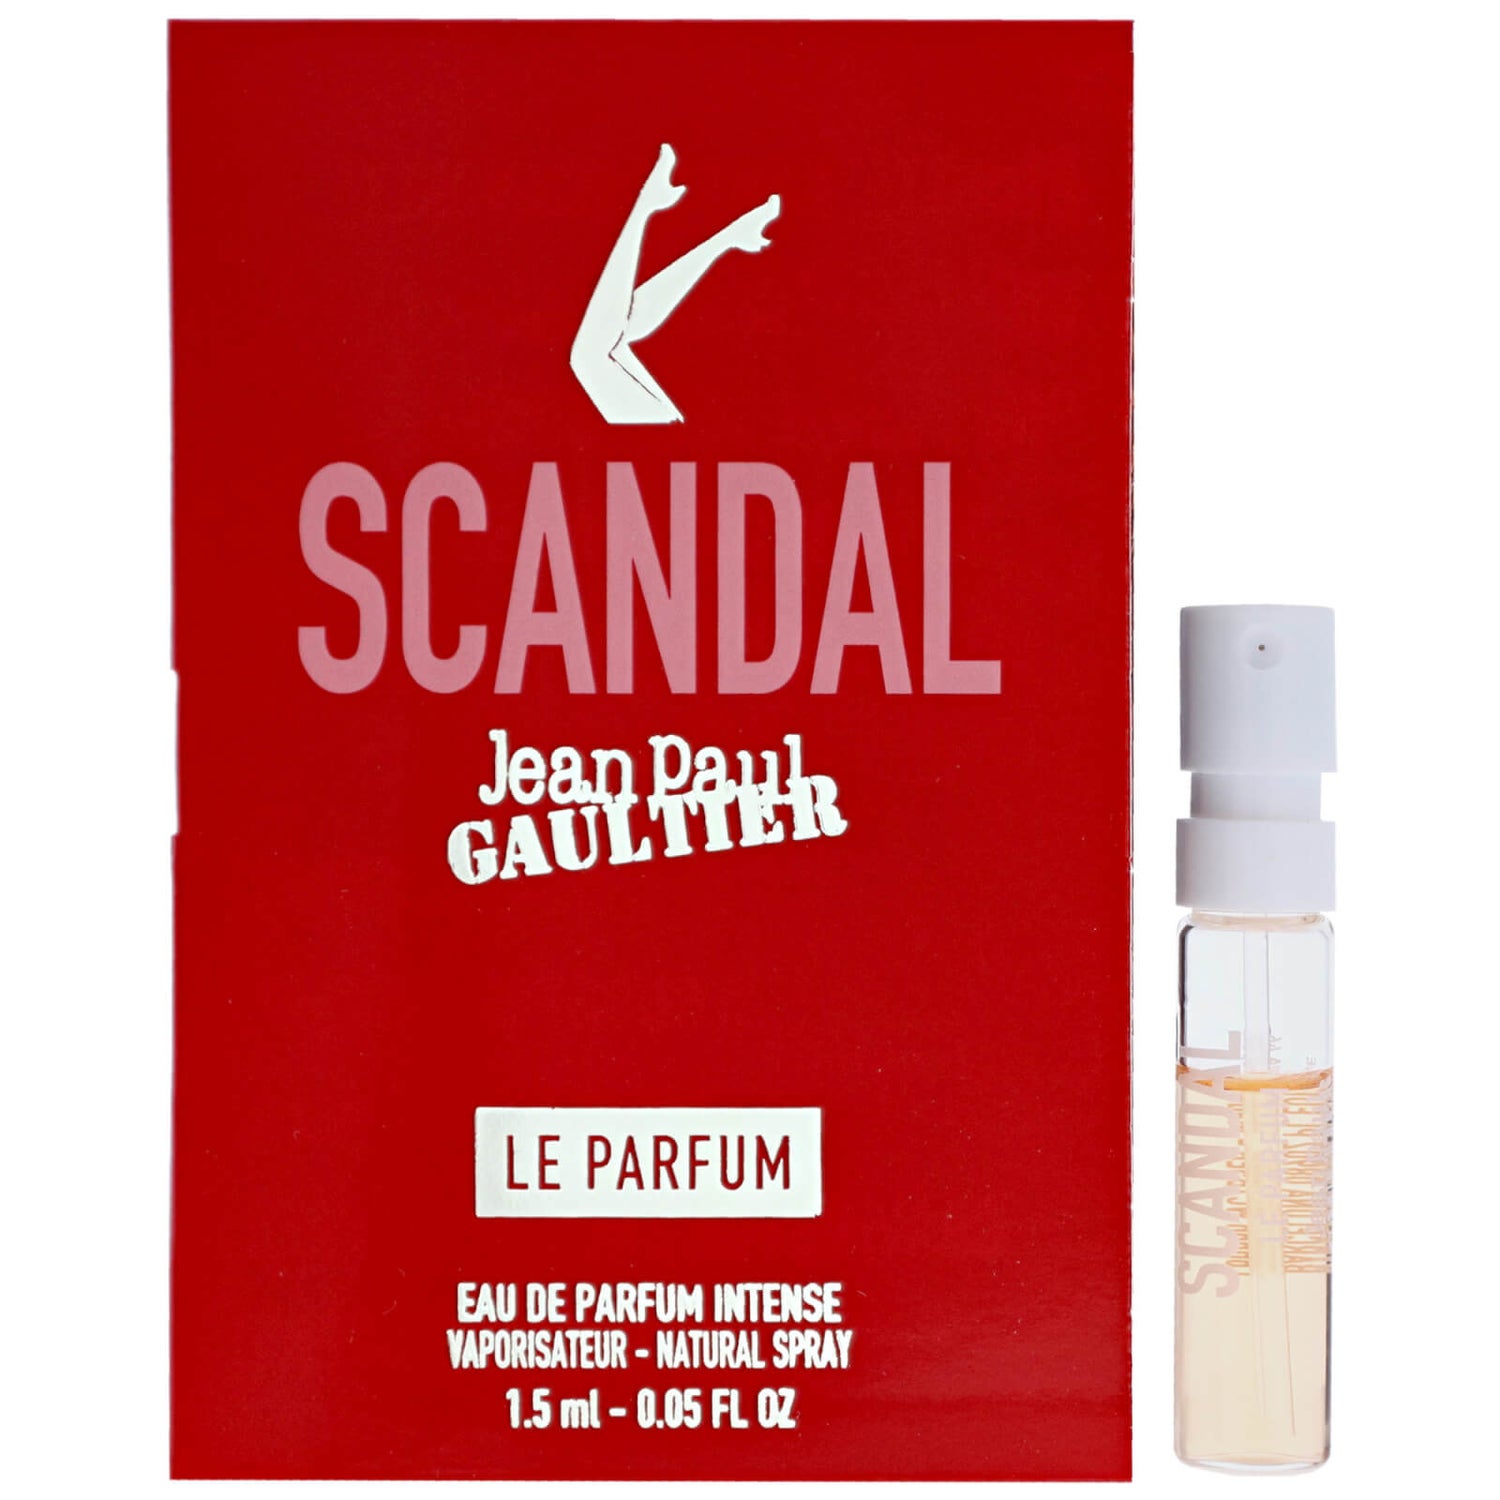 Jean Paul Gaultier Scandal Le Parfum Spritzer 1.5ml - LOOKFANTASTIC